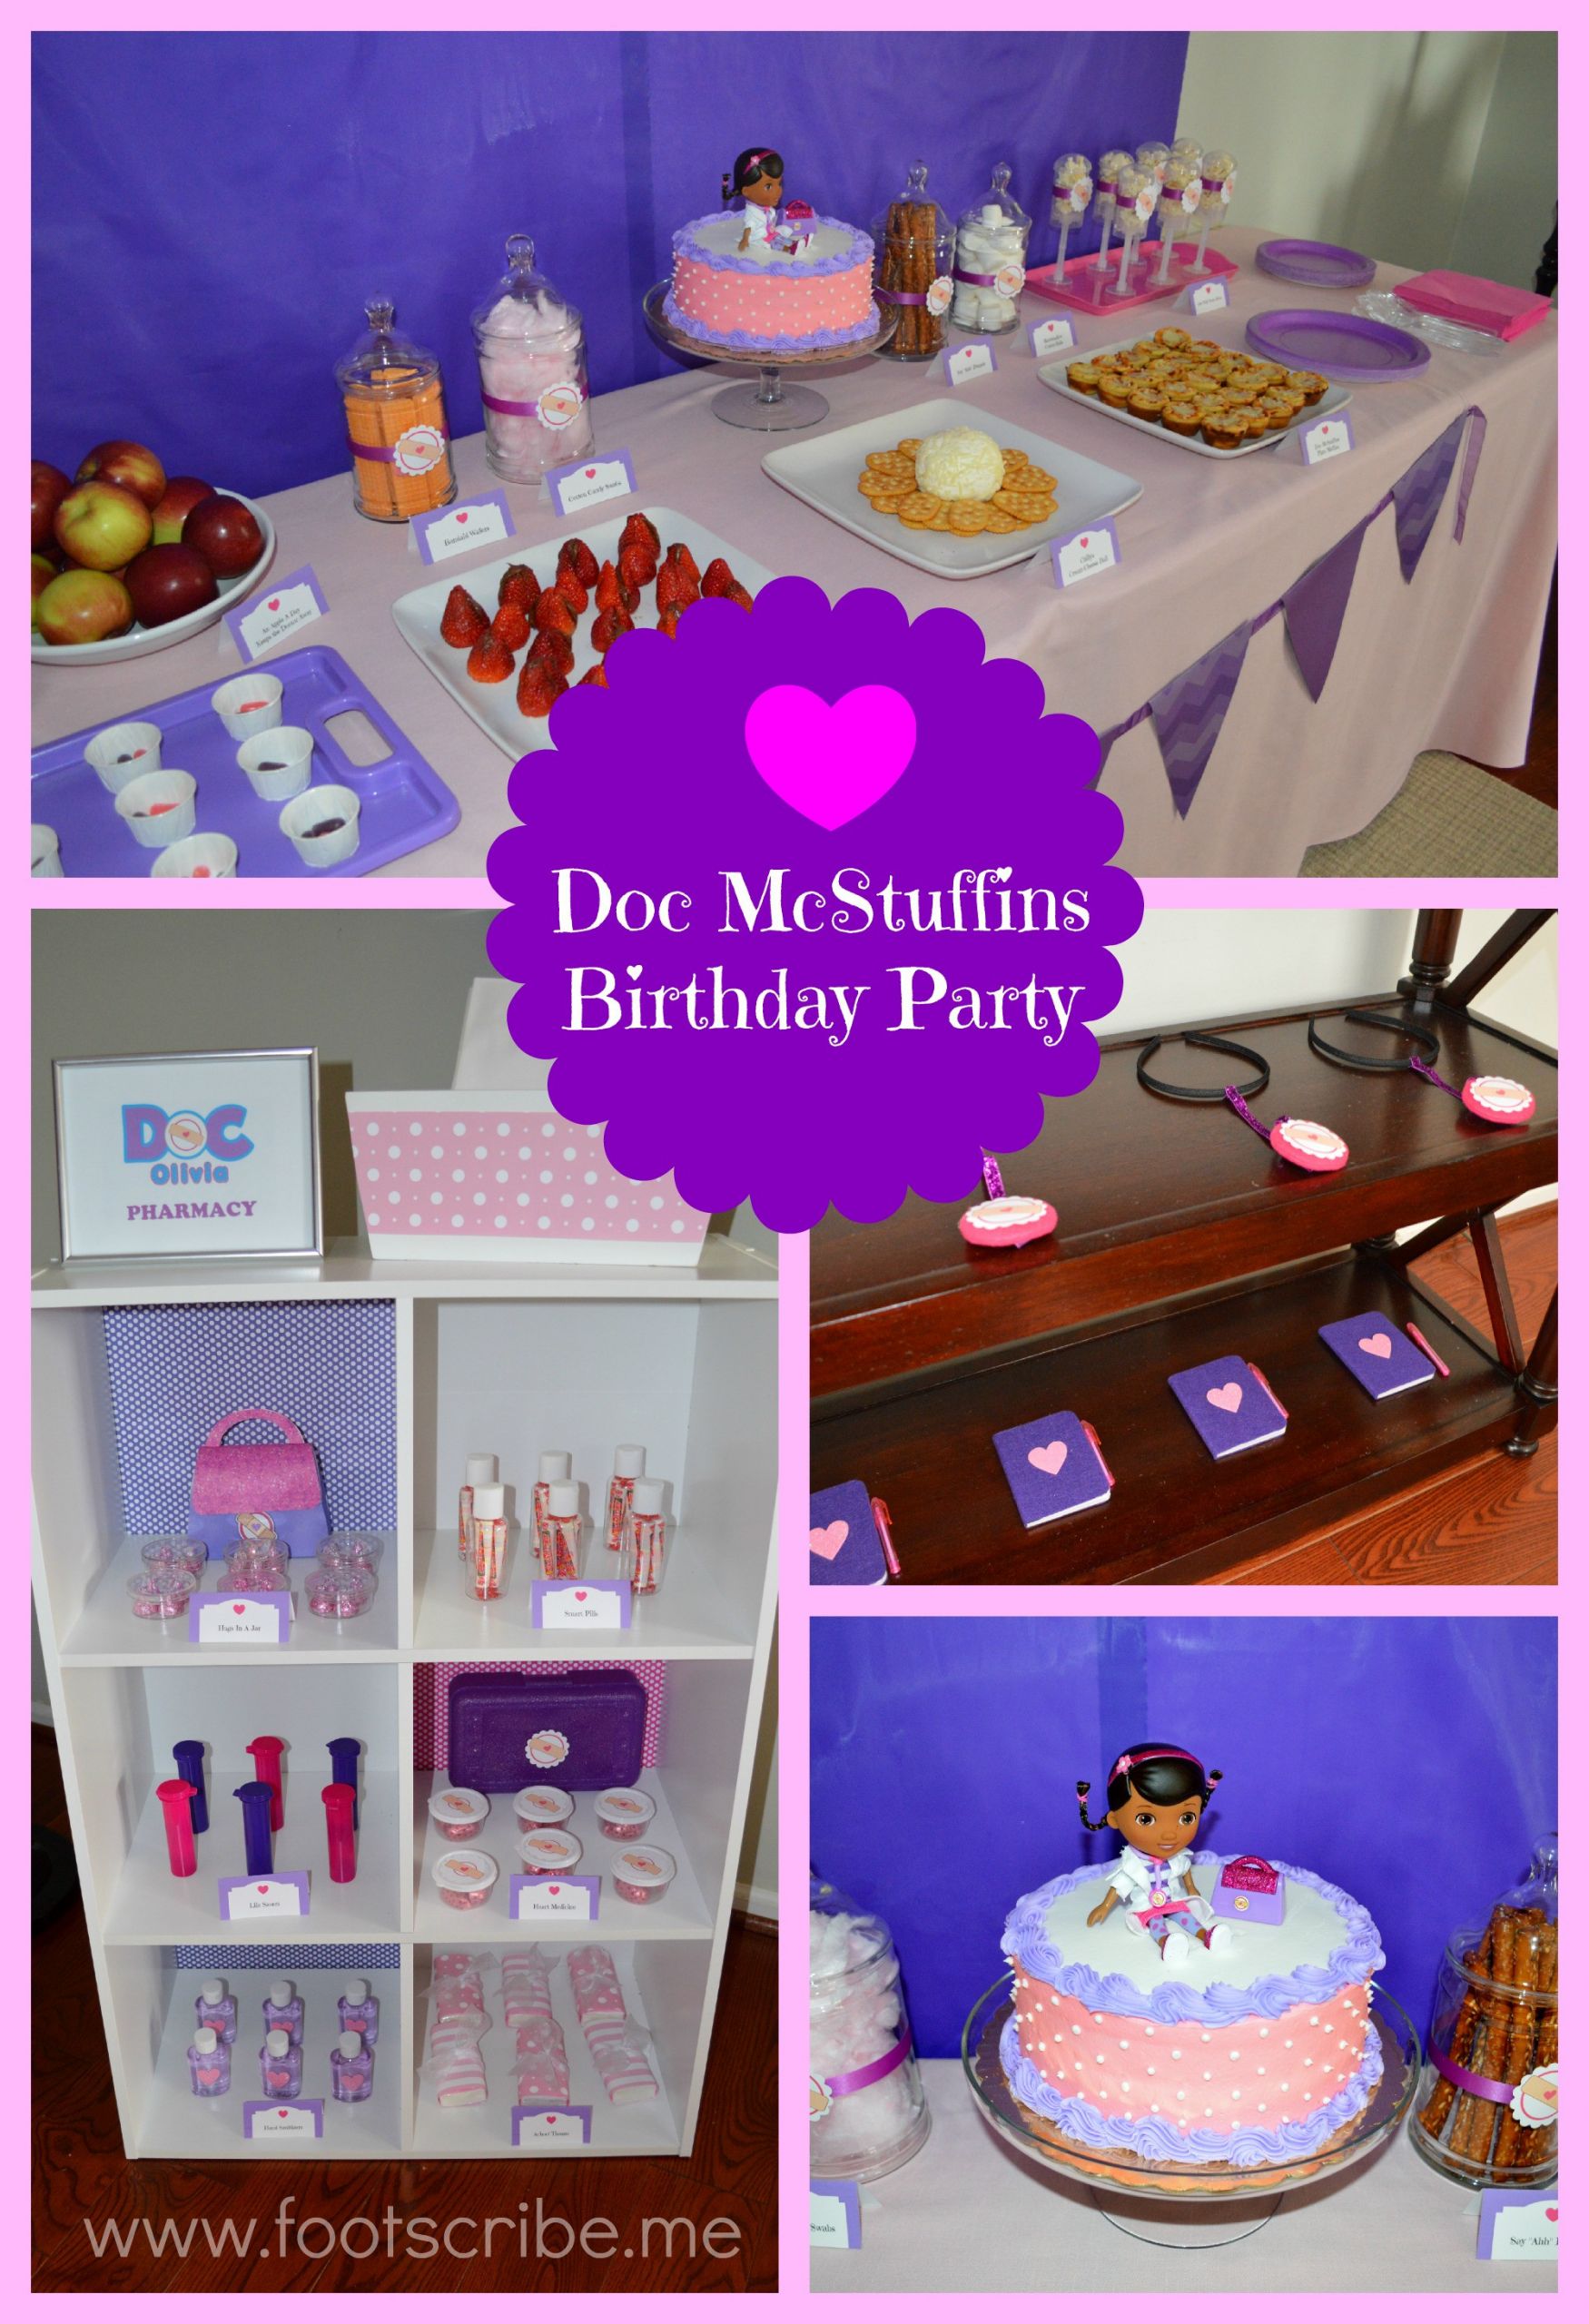 Doc Mcstuffins Birthday Party Ideas
 My Daughter’s Happy Healthy Doc McStuffins Birthday Party